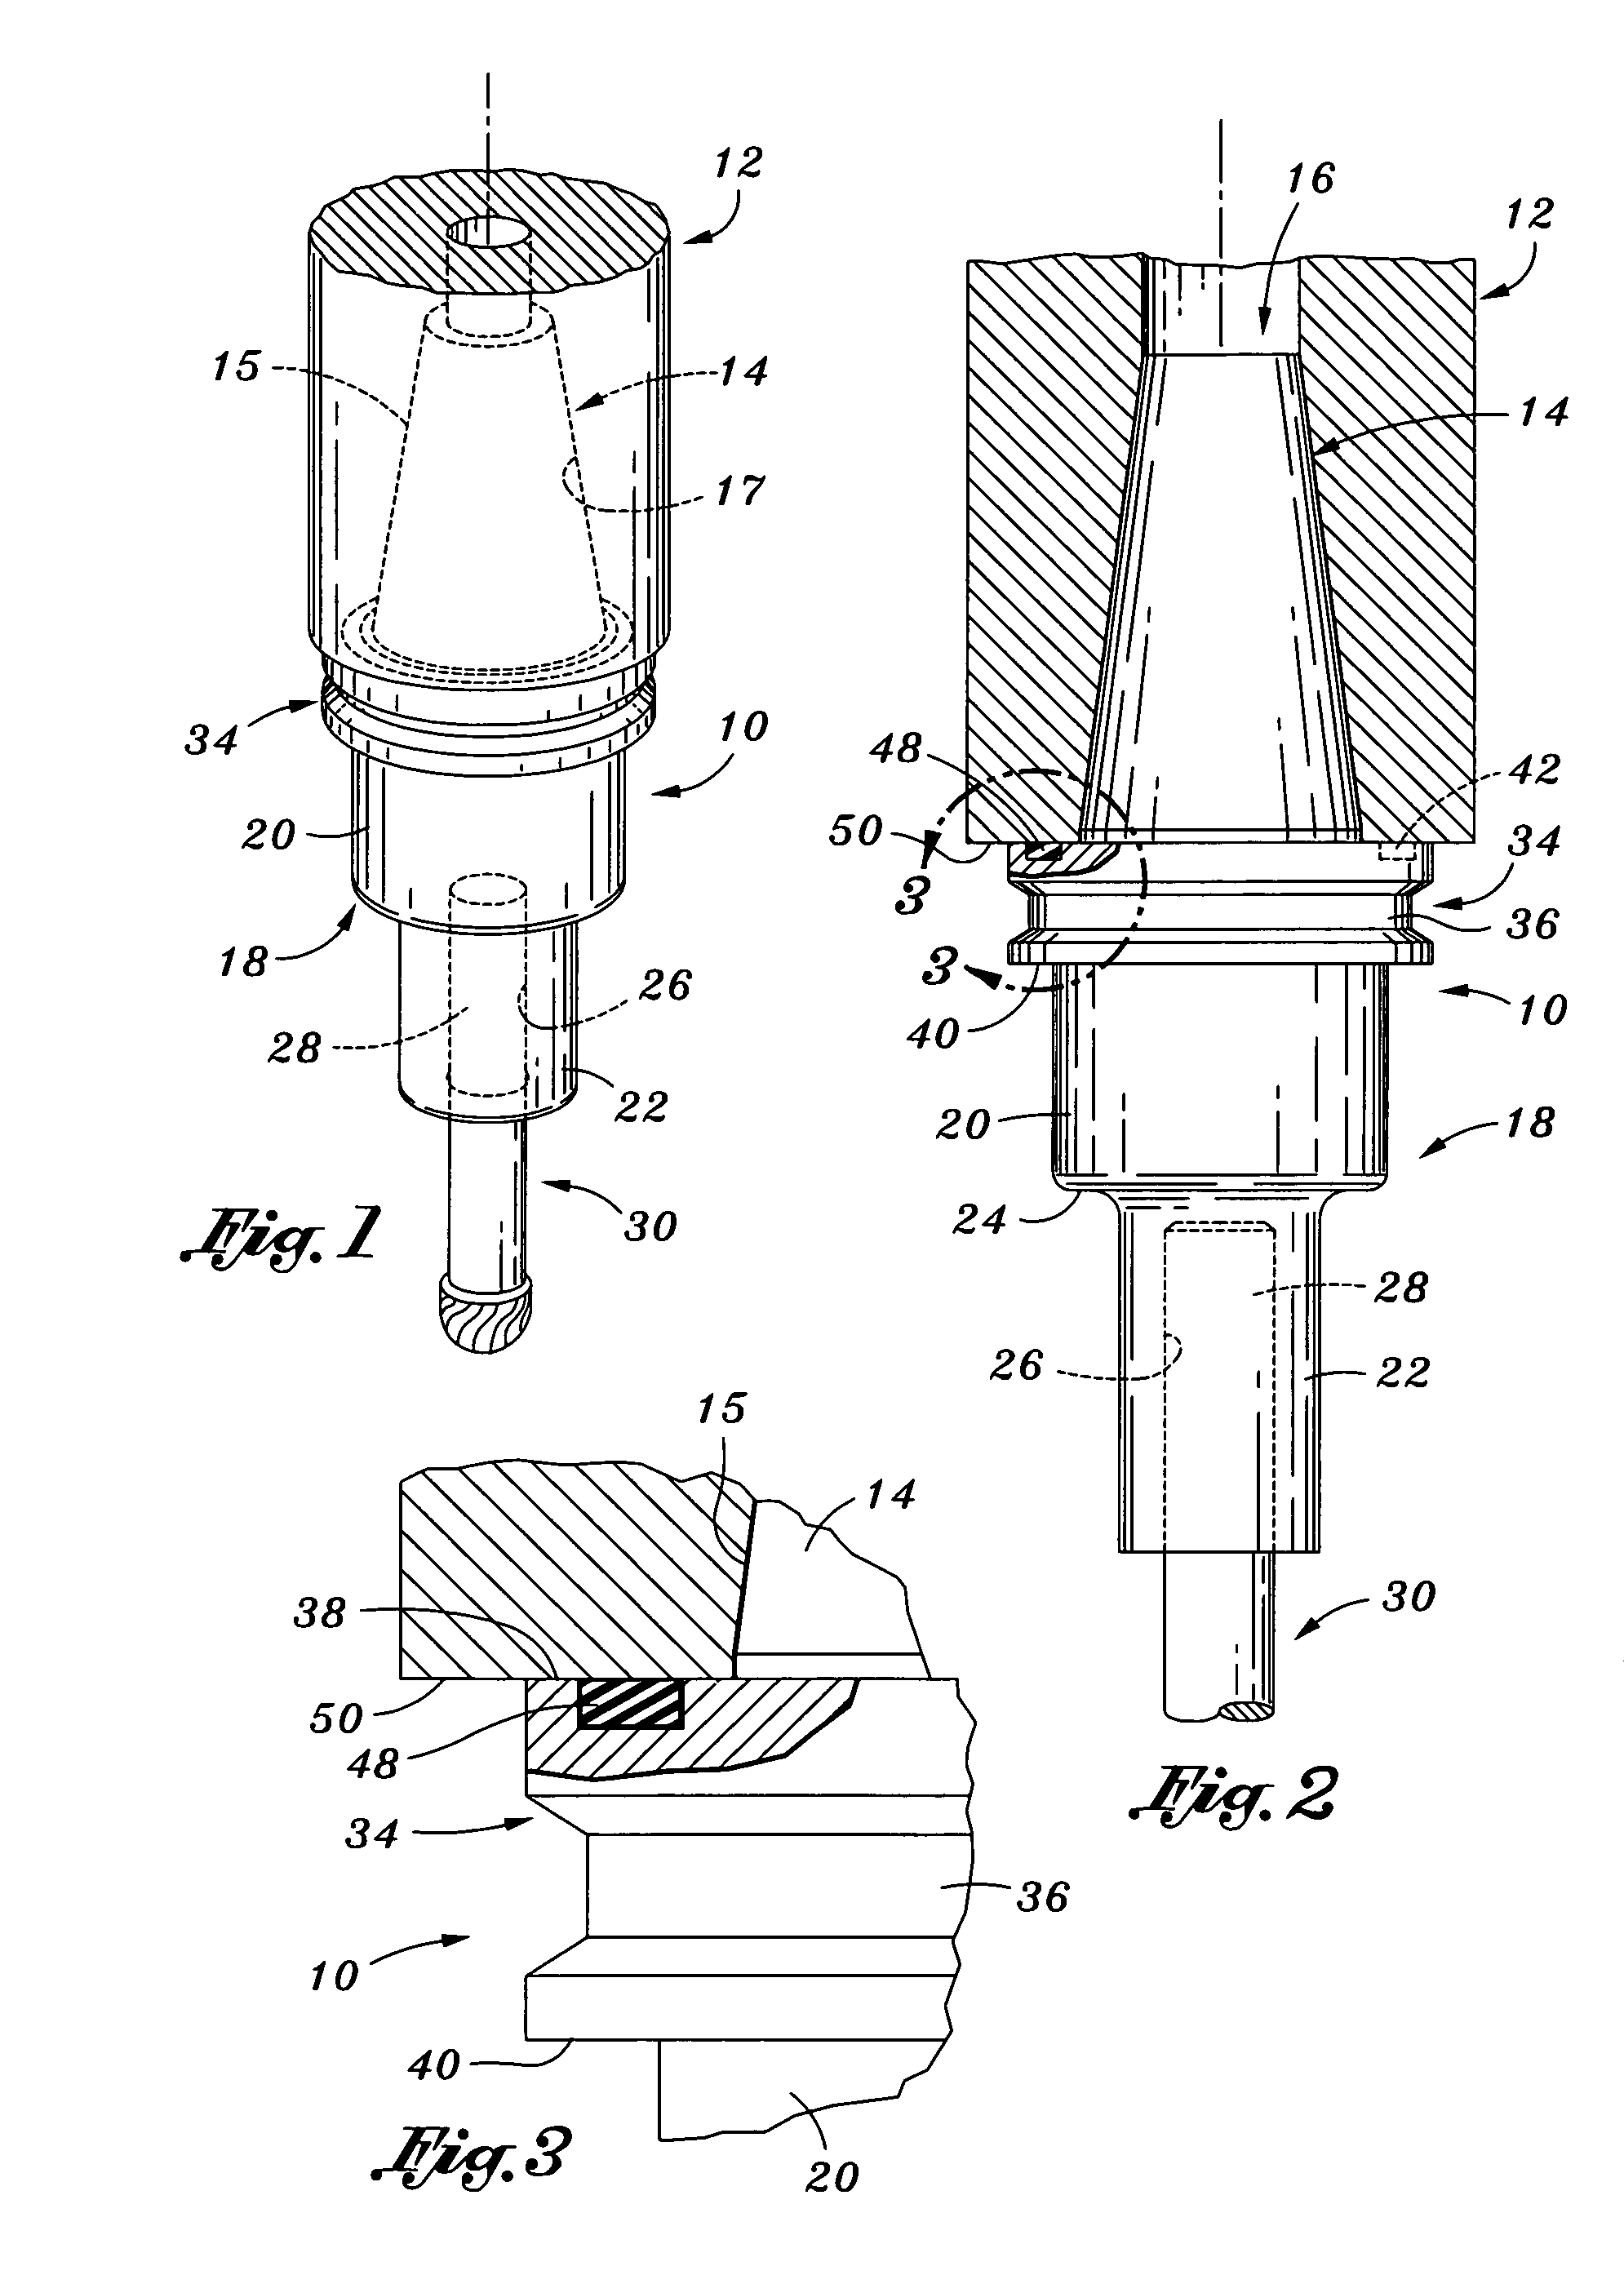 Tool holder dampening system